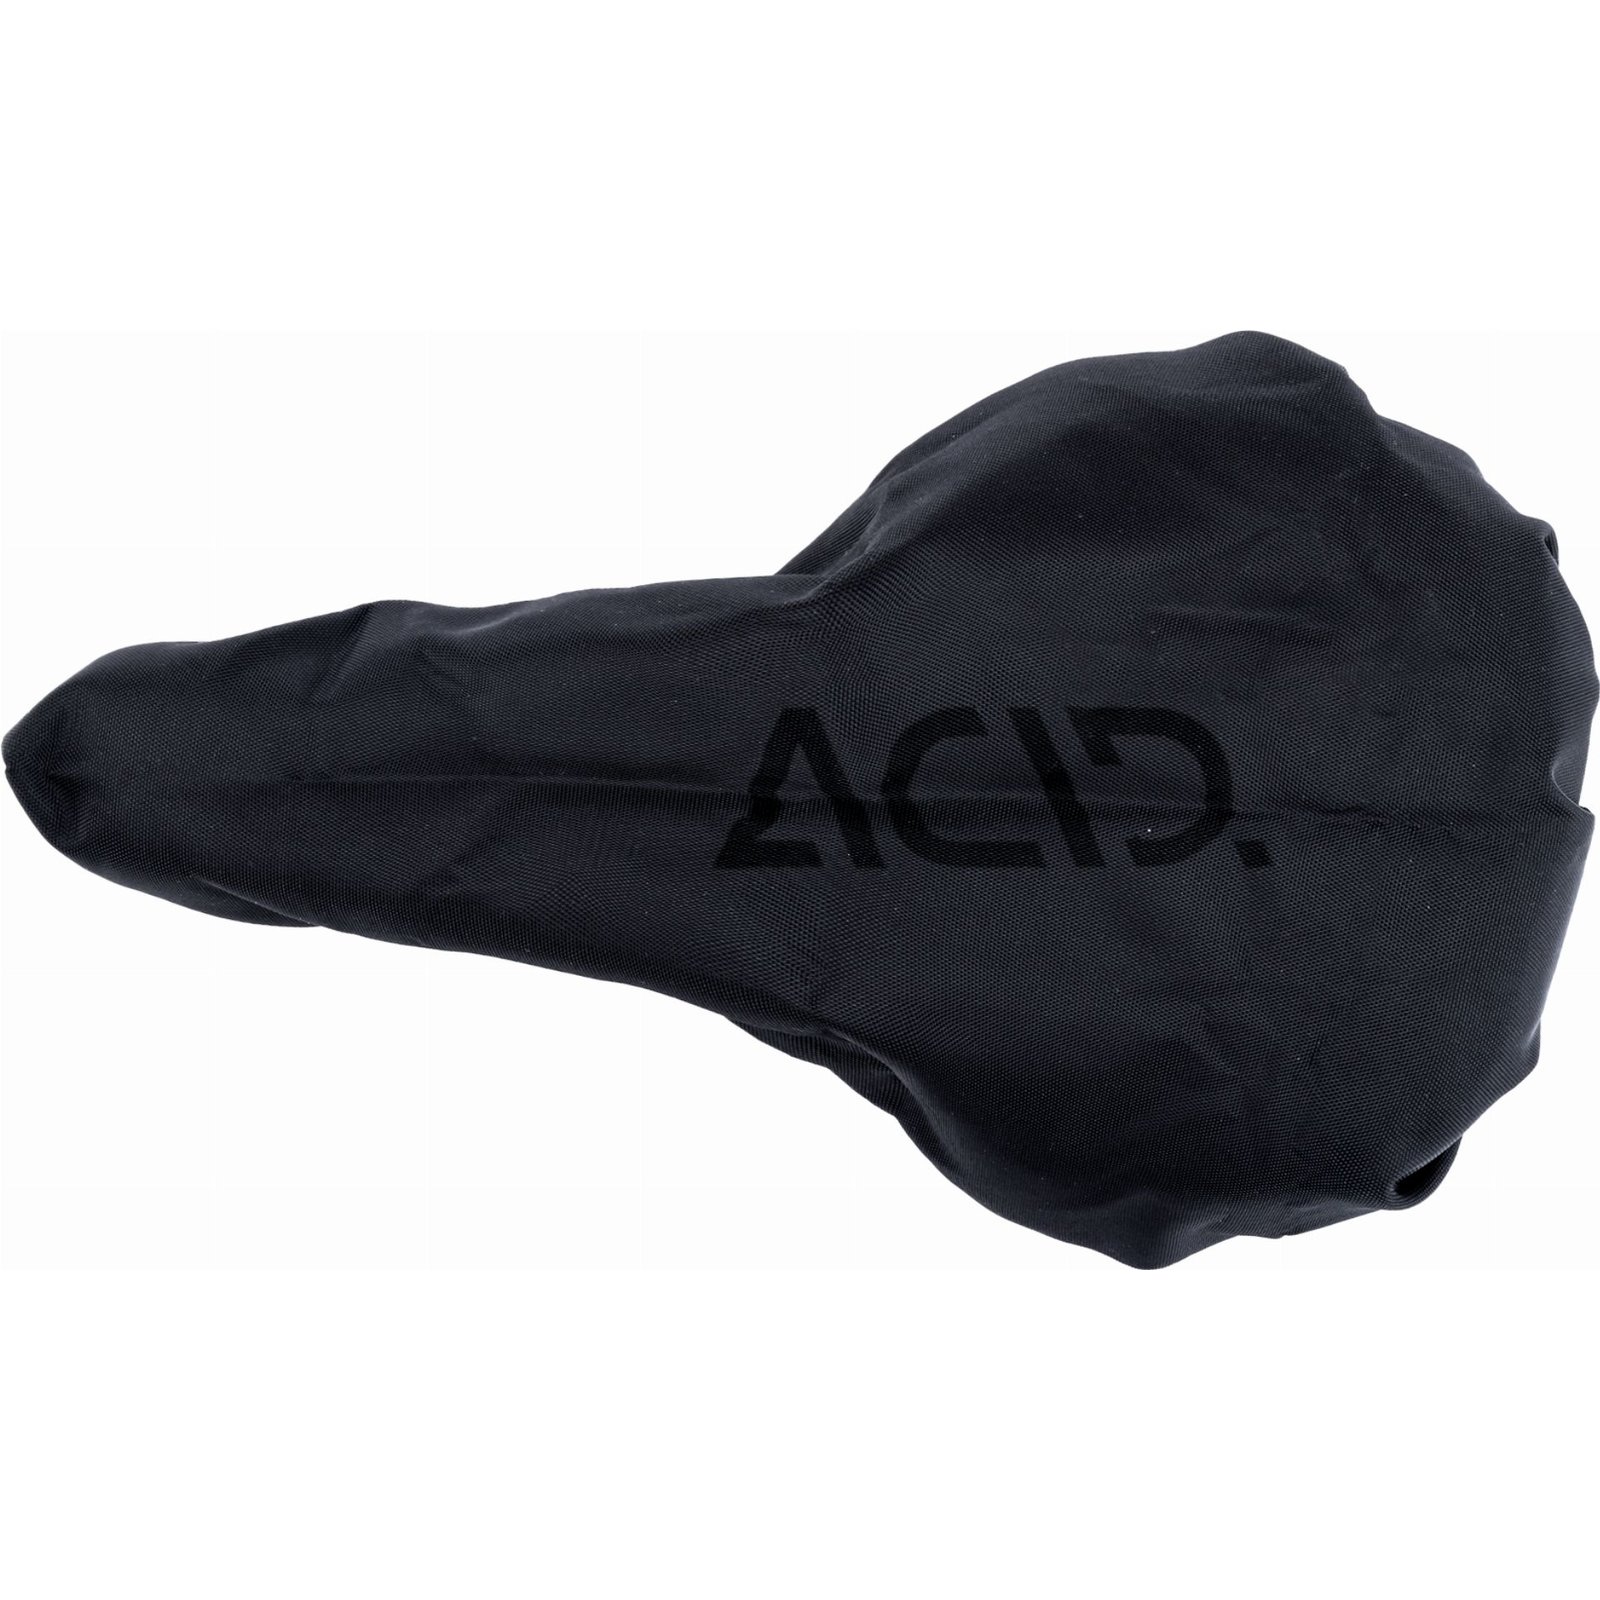 Acid Regenberzug black